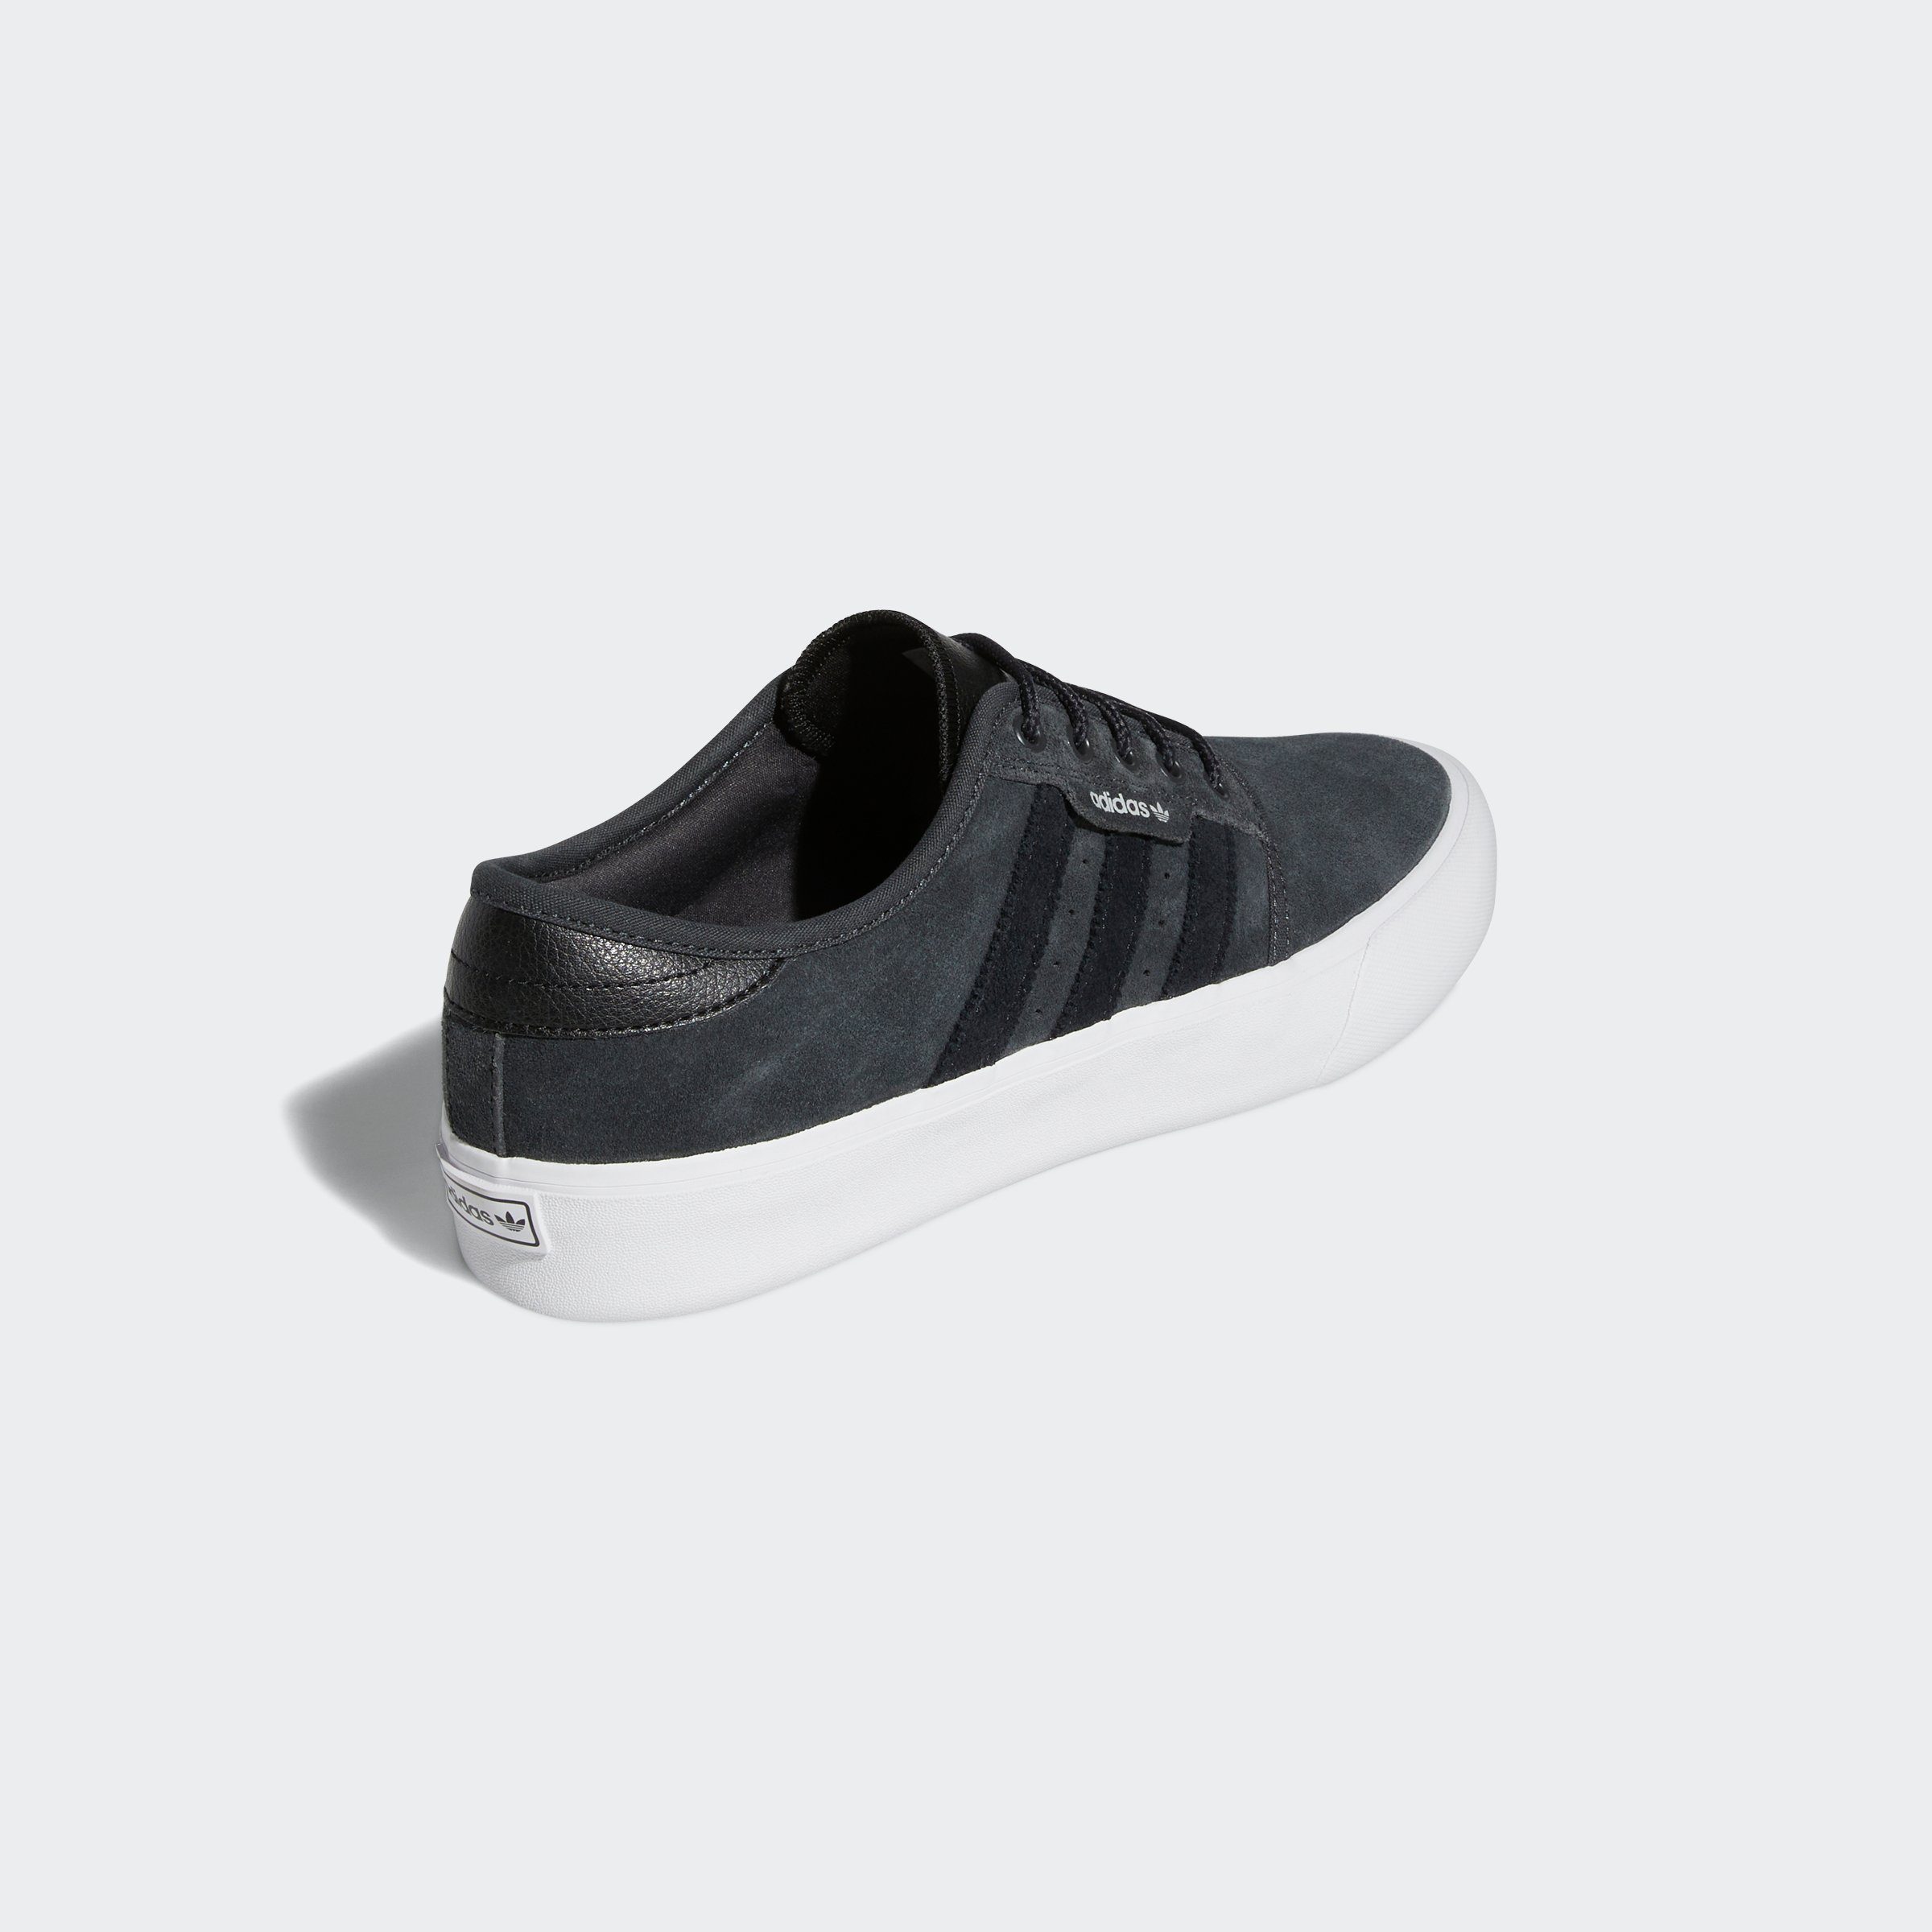 SEELEY Originals XT adidas Sneaker